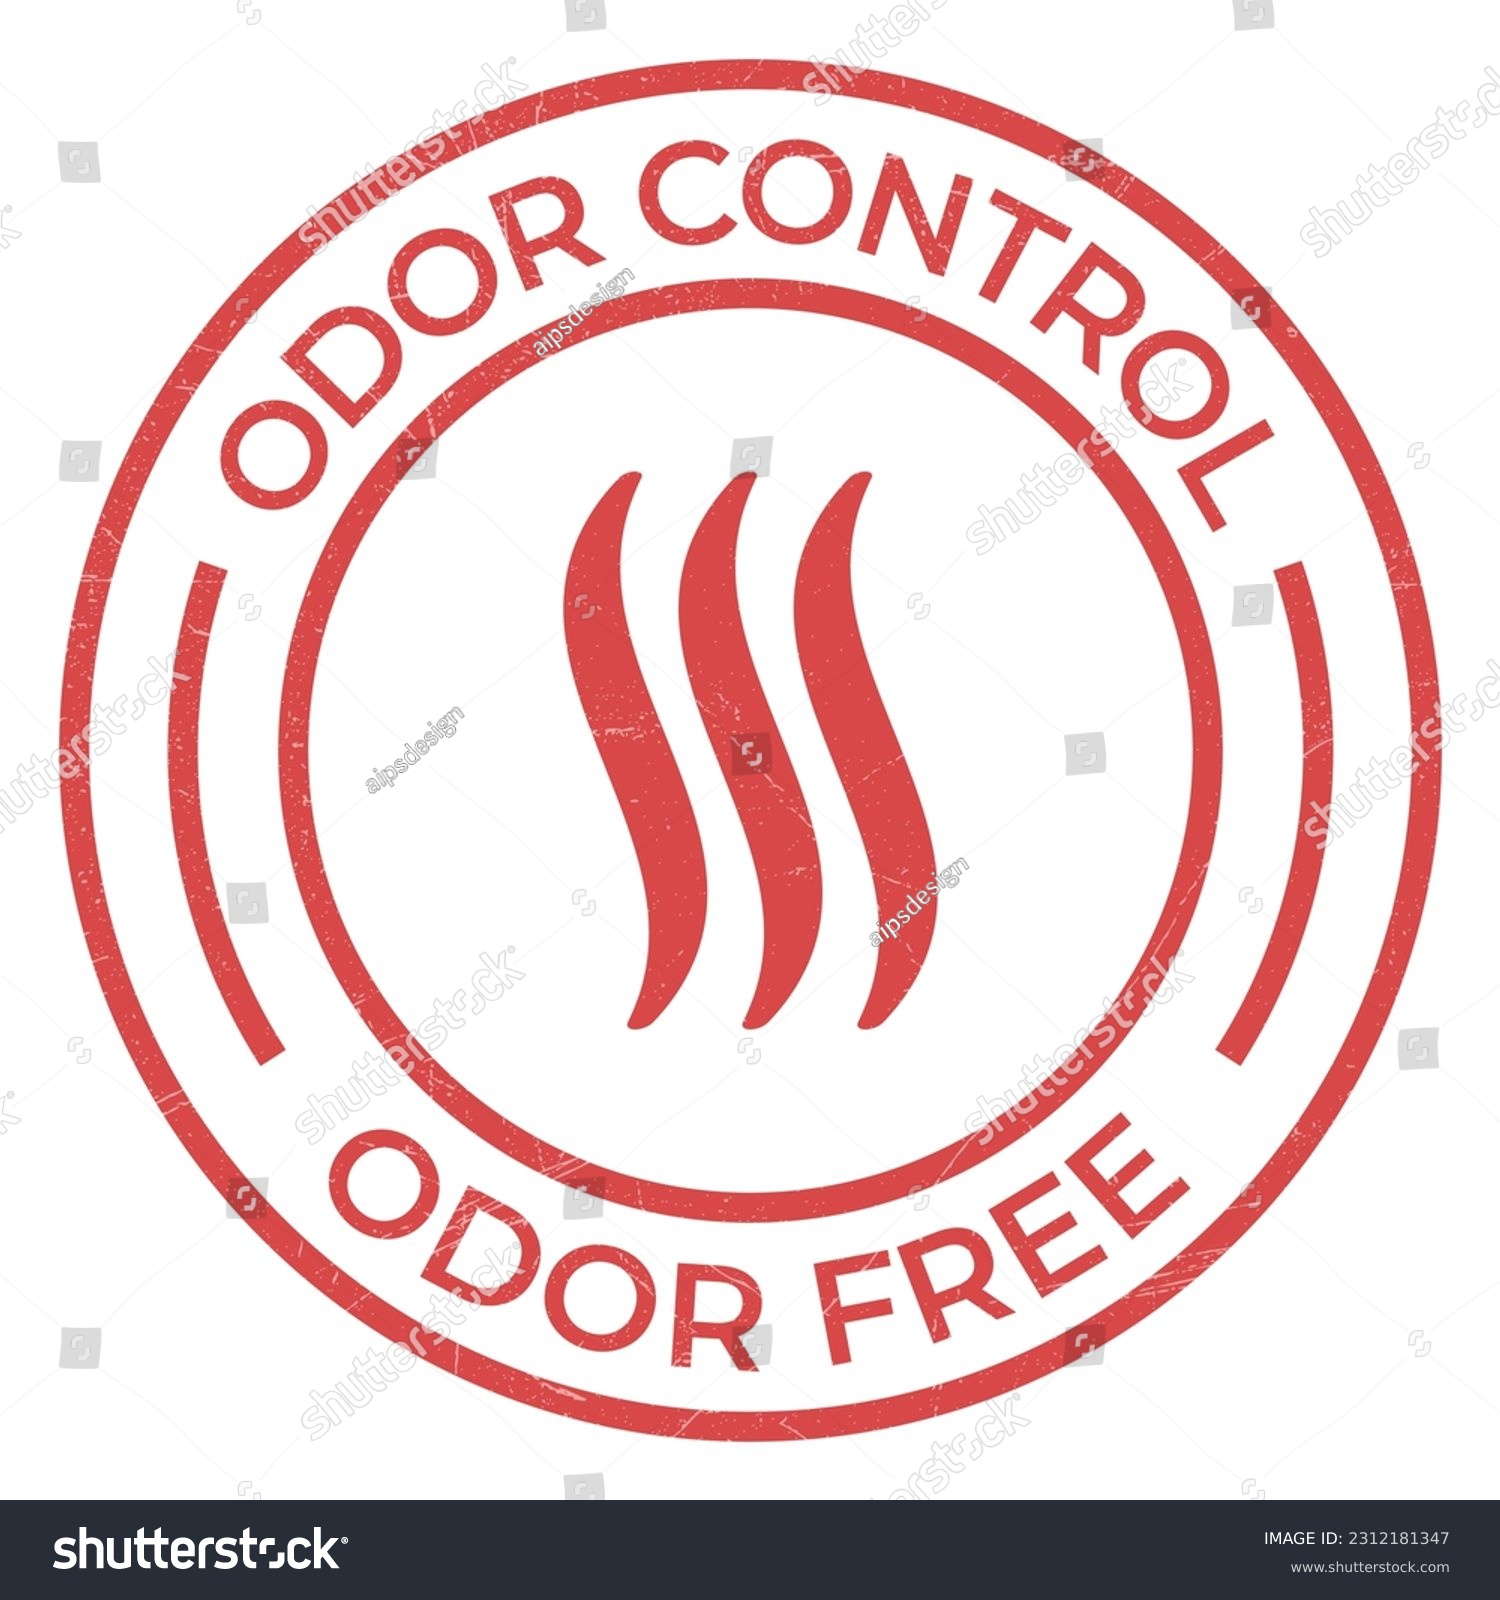 SVG of Odor Control Vector Badge, Odor Free Icon, Emblem, Label, Logo, Perfume Label, Stamp, Patch, Design Element Vector Illustration With Grunge Texture svg